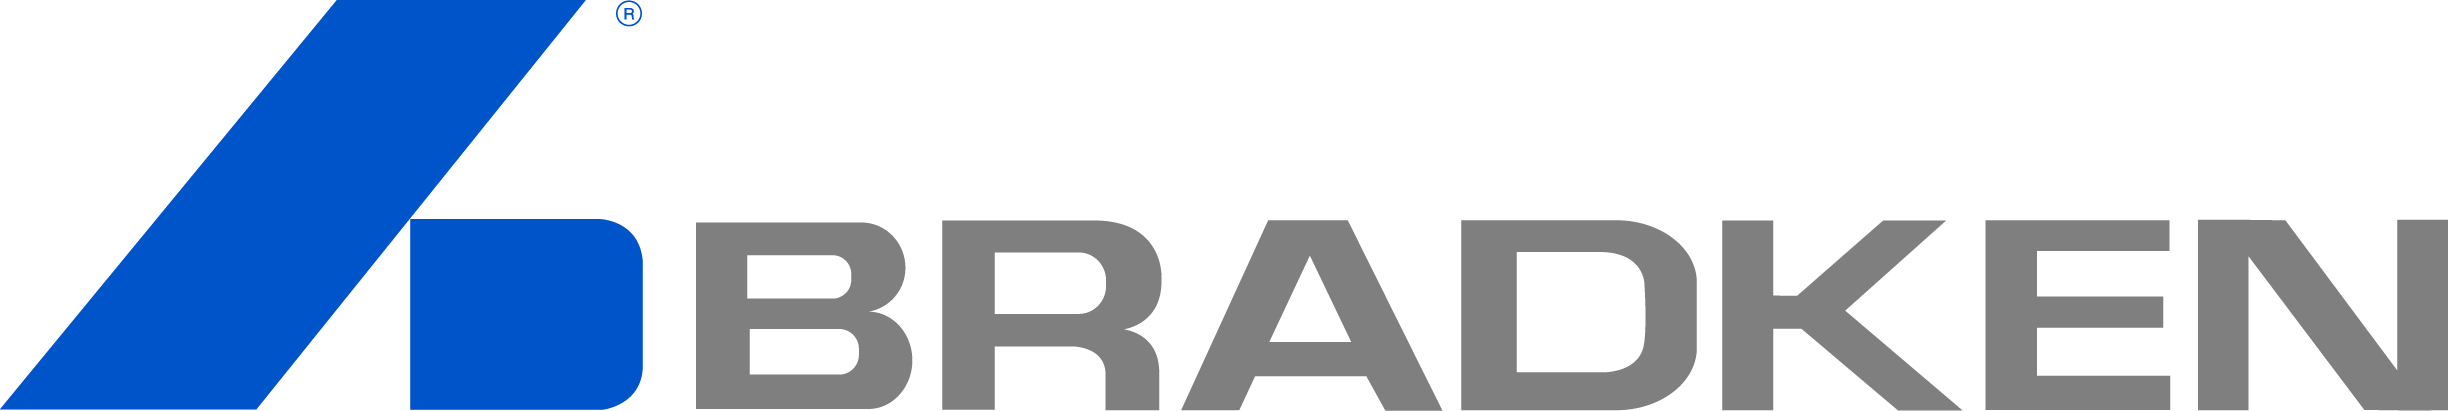 Bradken Logo